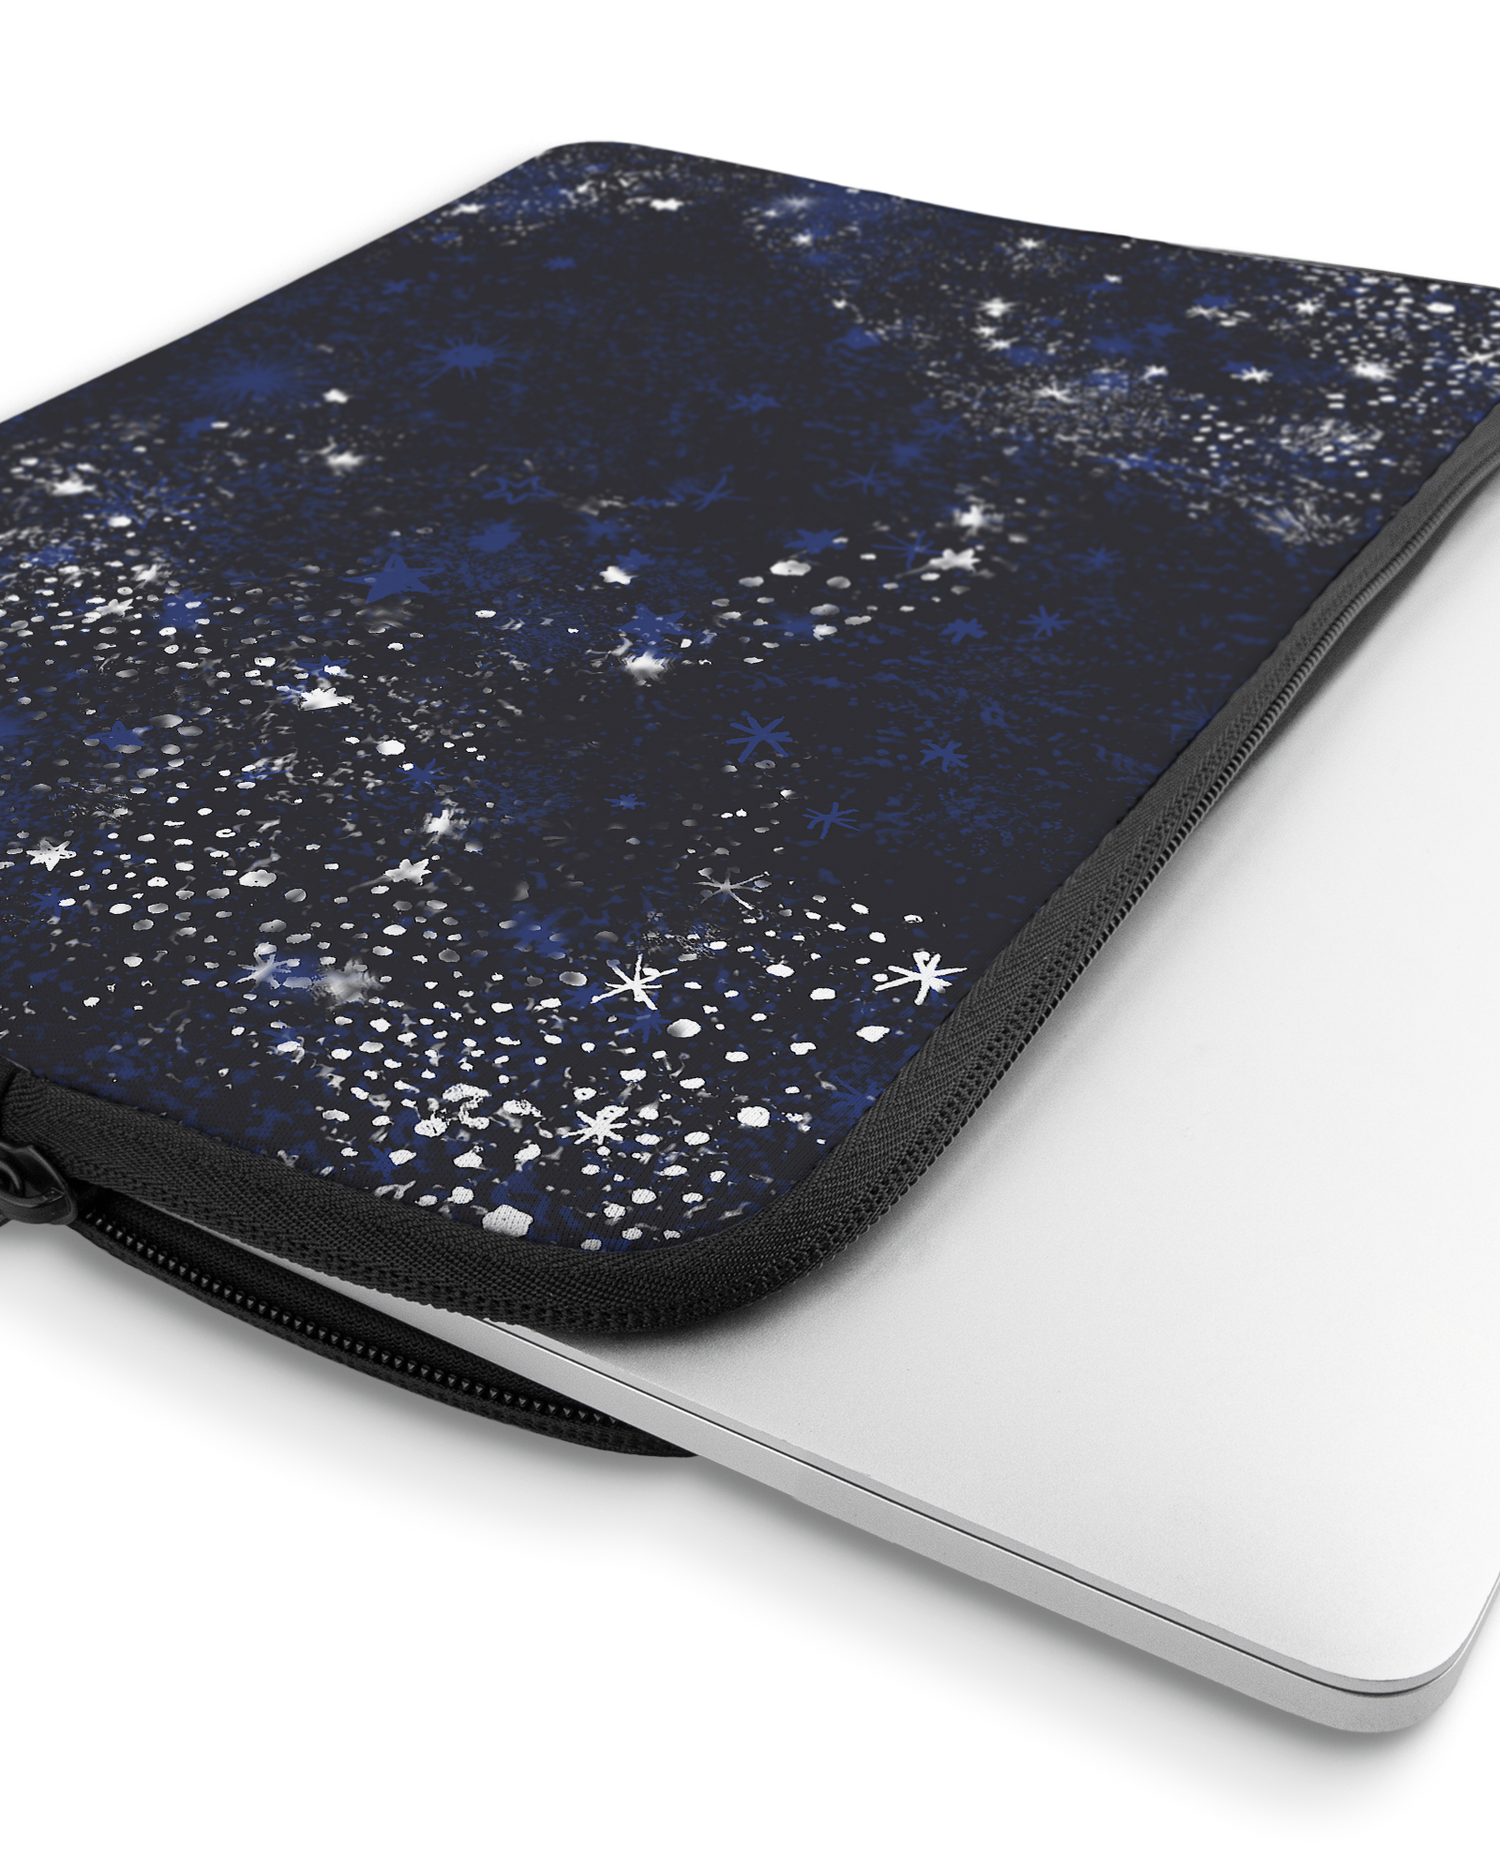 Starry Night Sky Laptop Case 13 inch with device inside